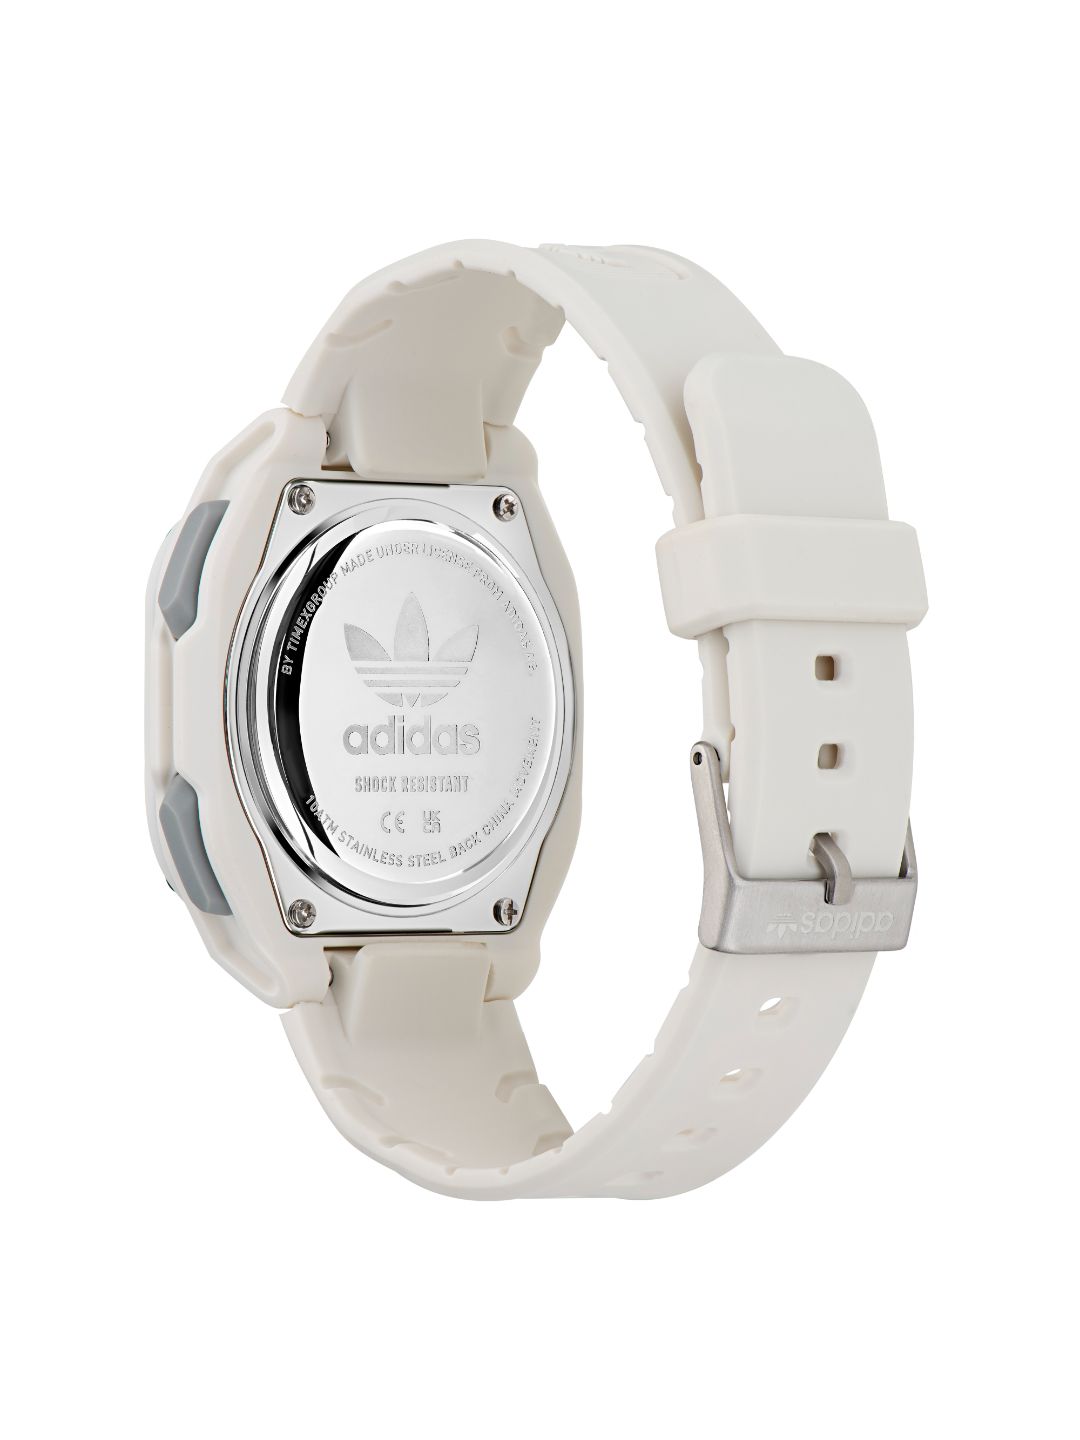 Adidas Originals Digital Dial Unisex Watch - AOST23062